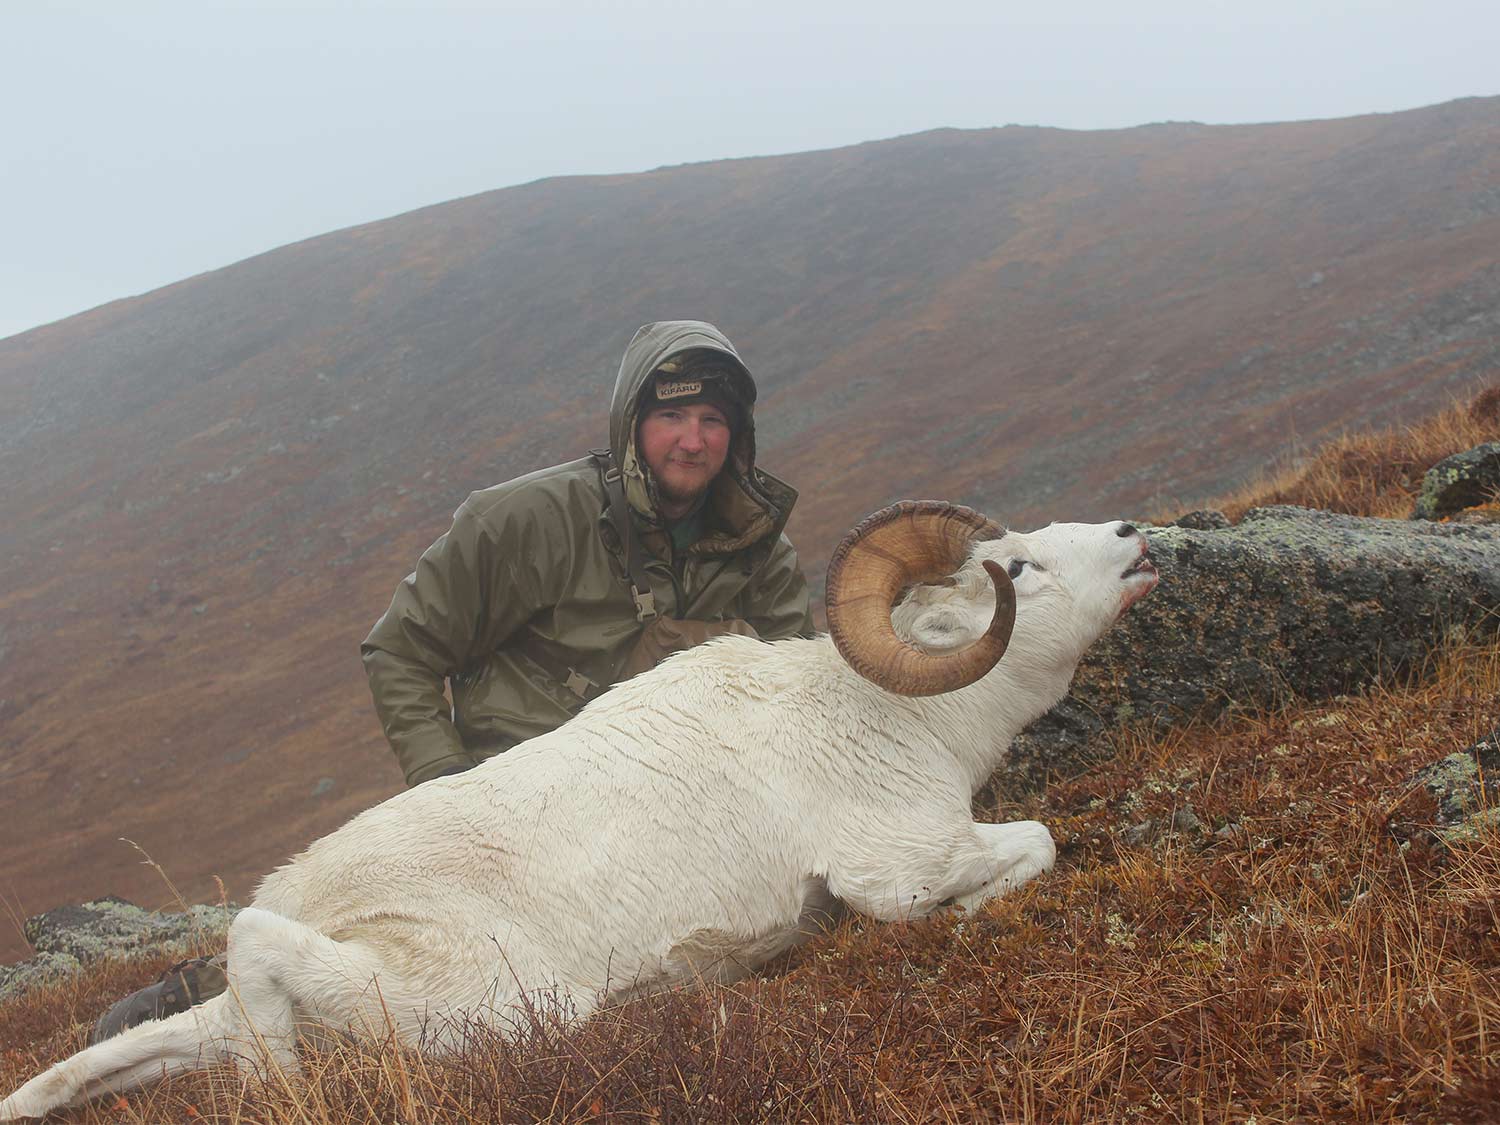 A hunter kneeling behind a white sheep.